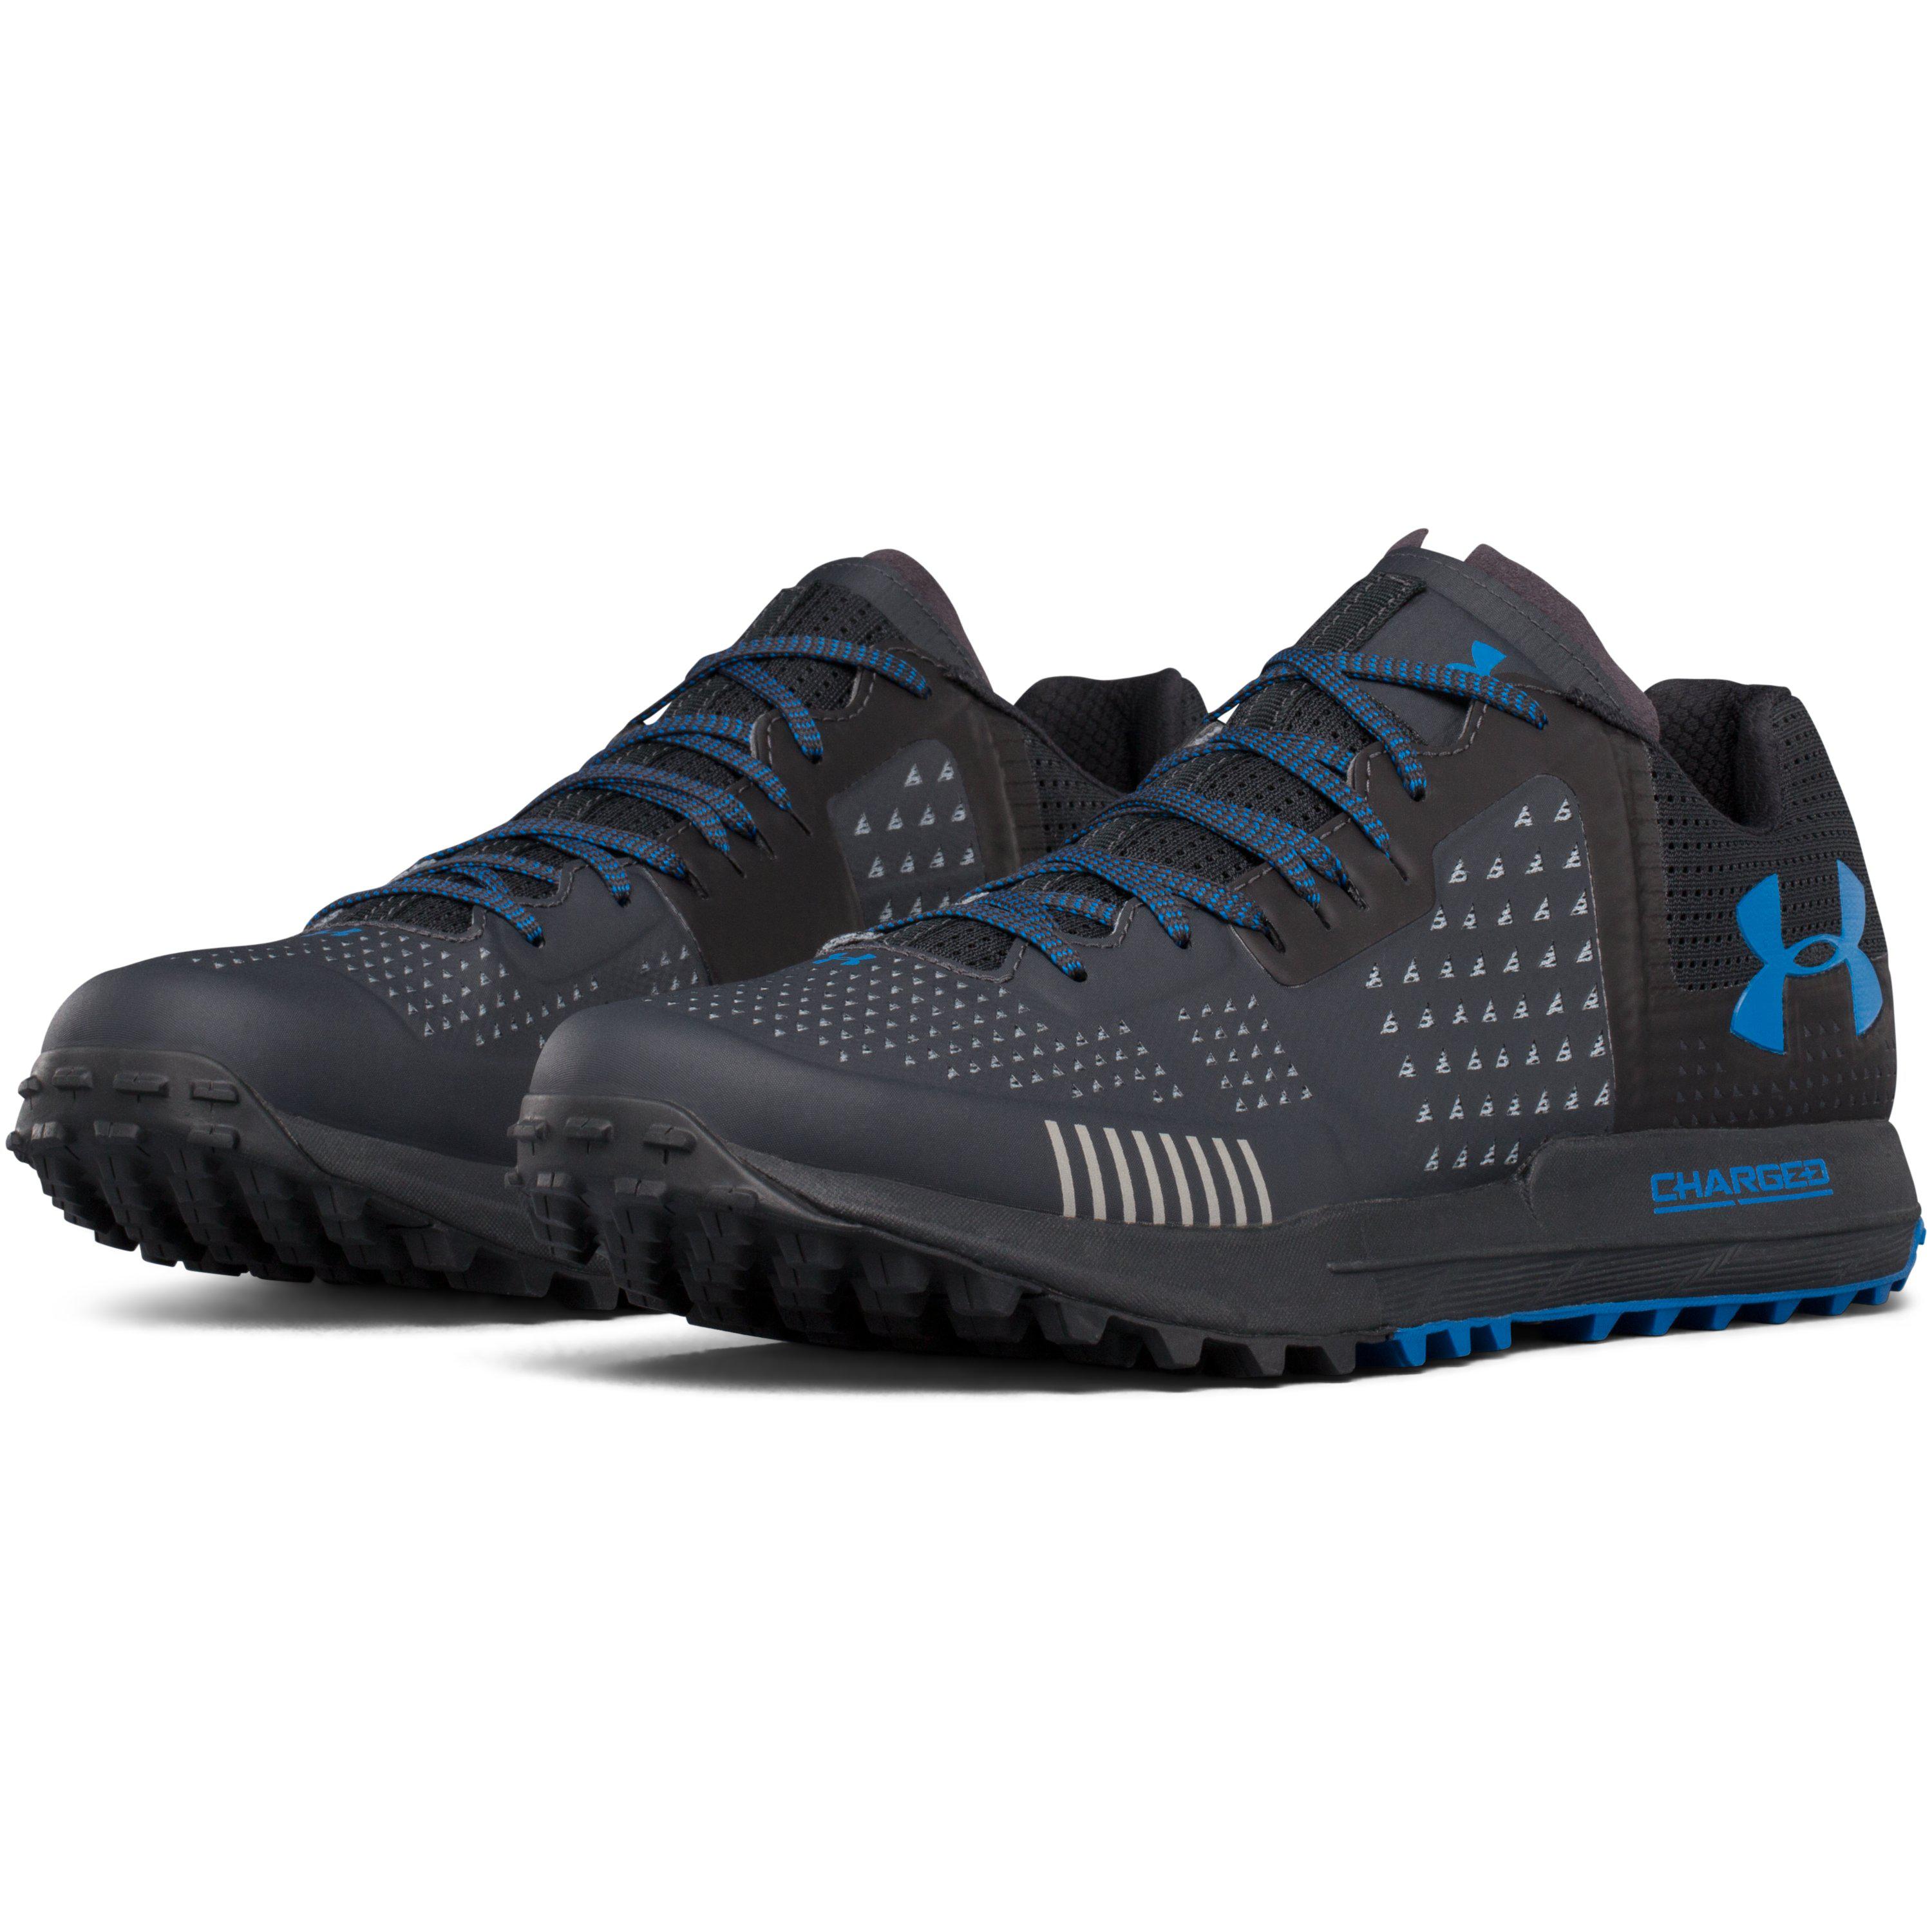 Under Armour Horizon RTT Trail Running Shoes Herren Sport Schuhe 1287337-301 